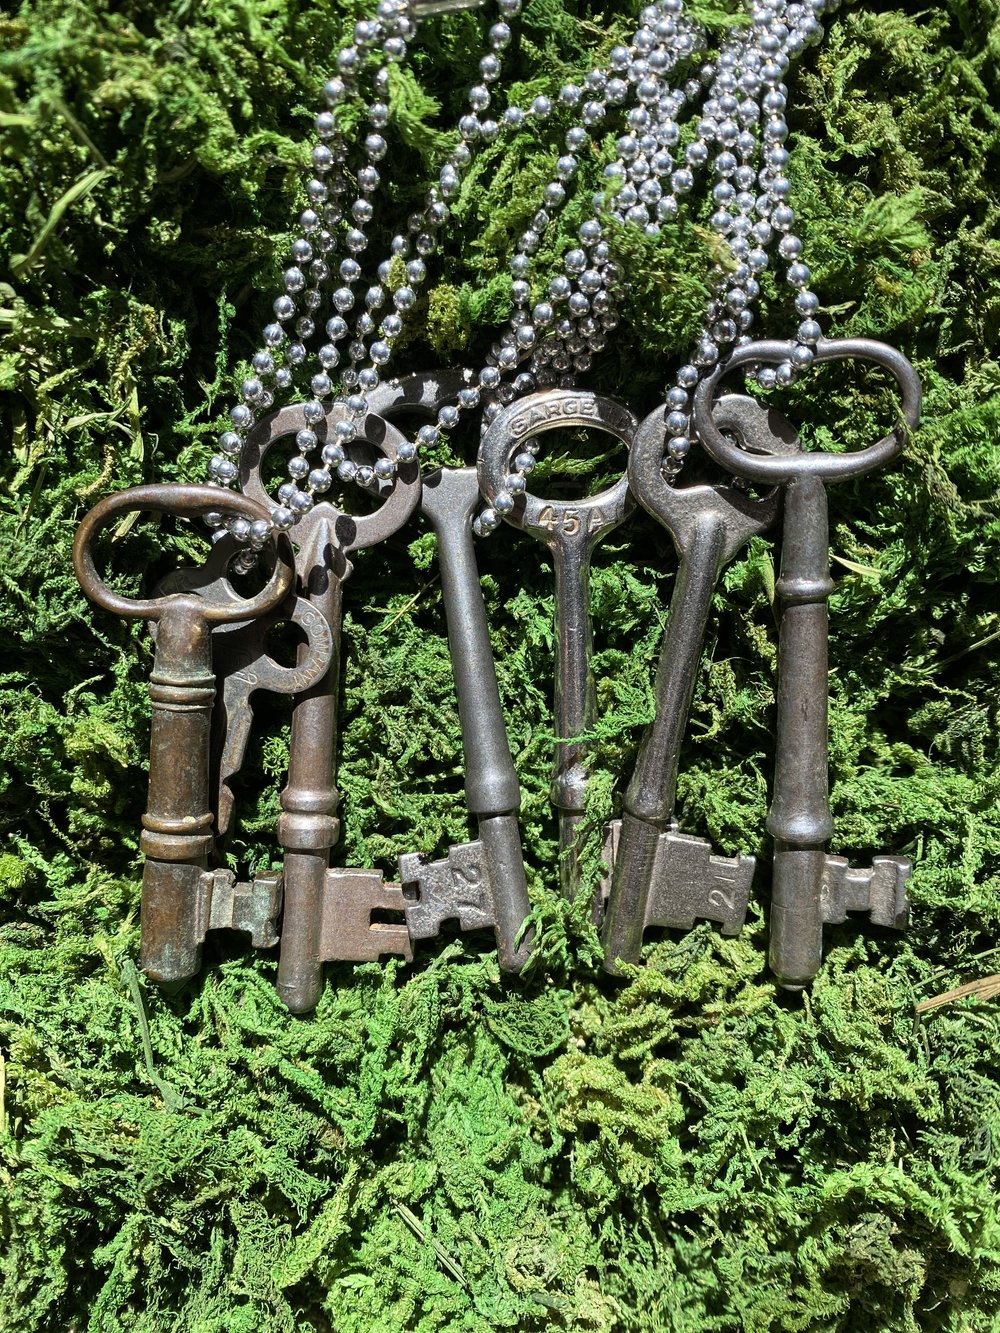 Vintage Key Necklace Men, Key Necklace Stainless Steel